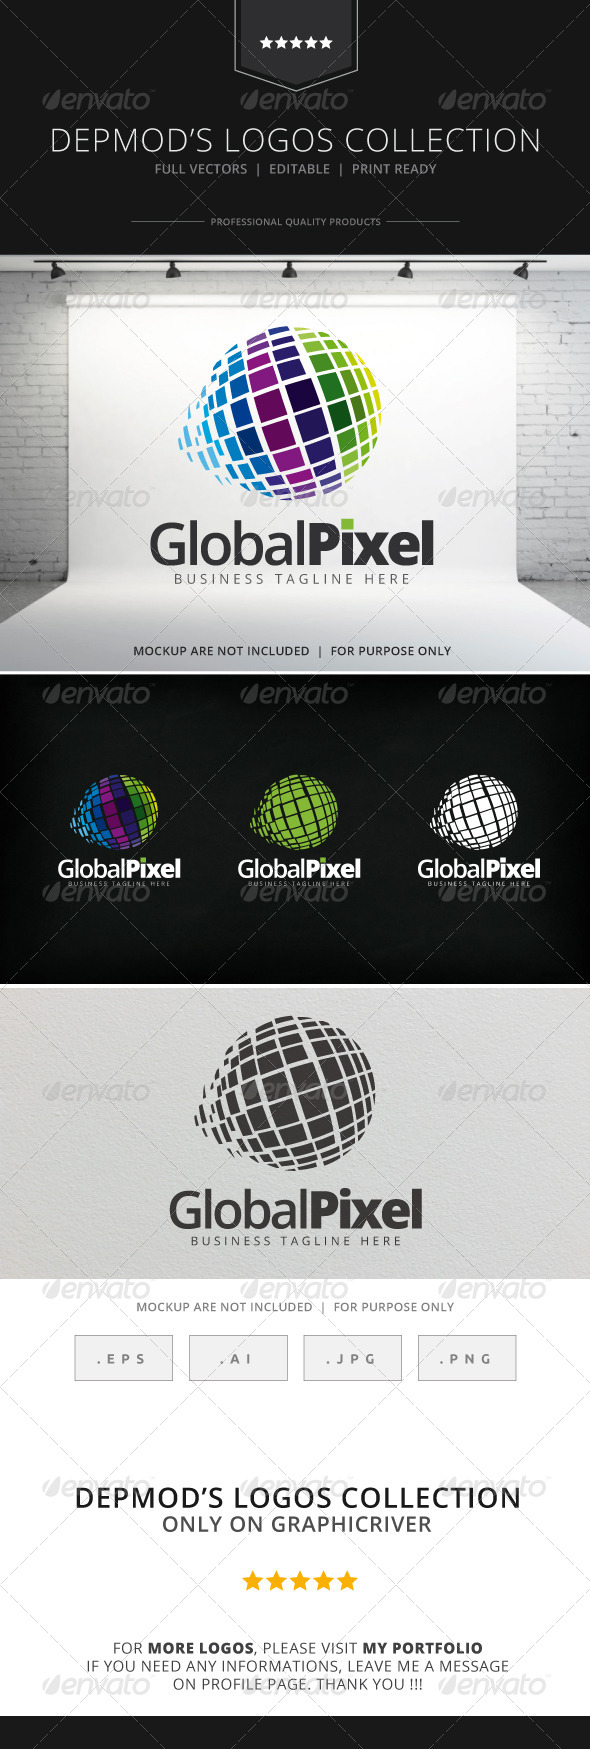 Global Pixel Logo